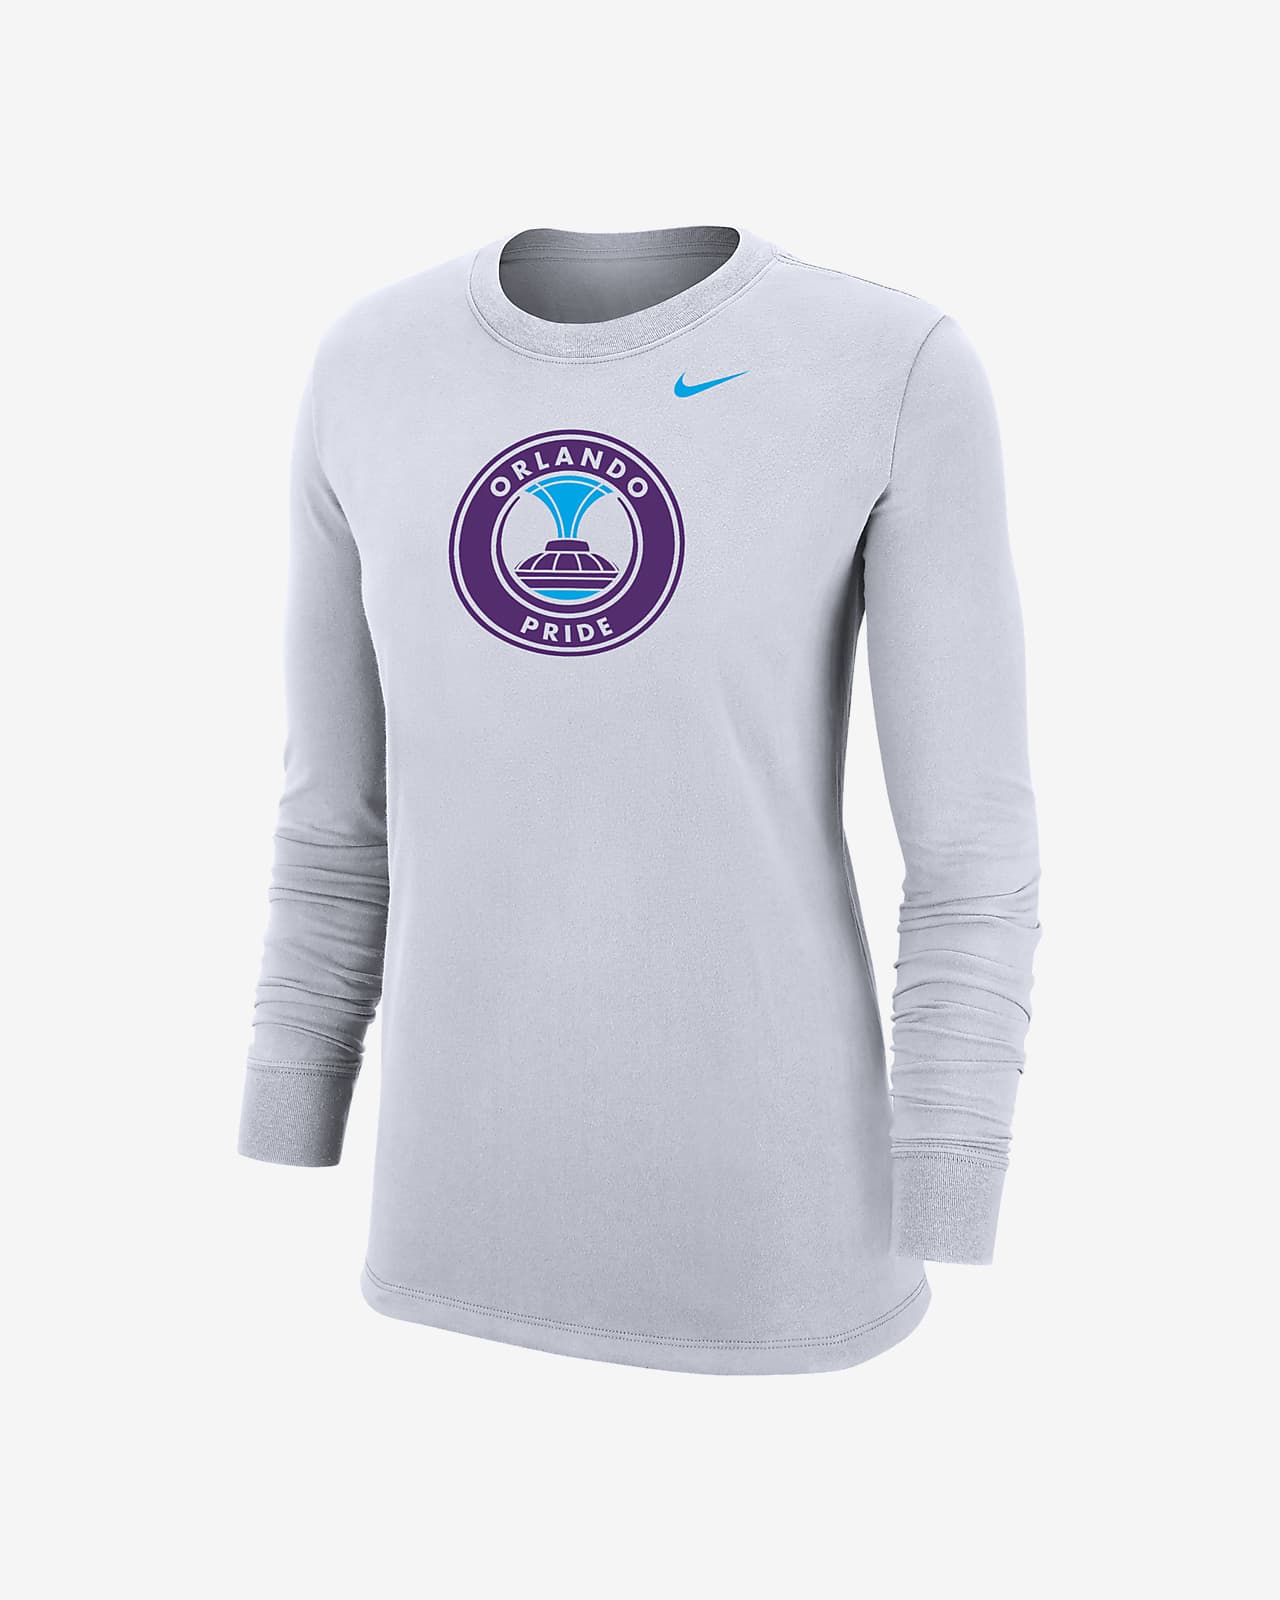 Orlando Pride Women's Nike Soccer Long-Sleeve T-Shirt